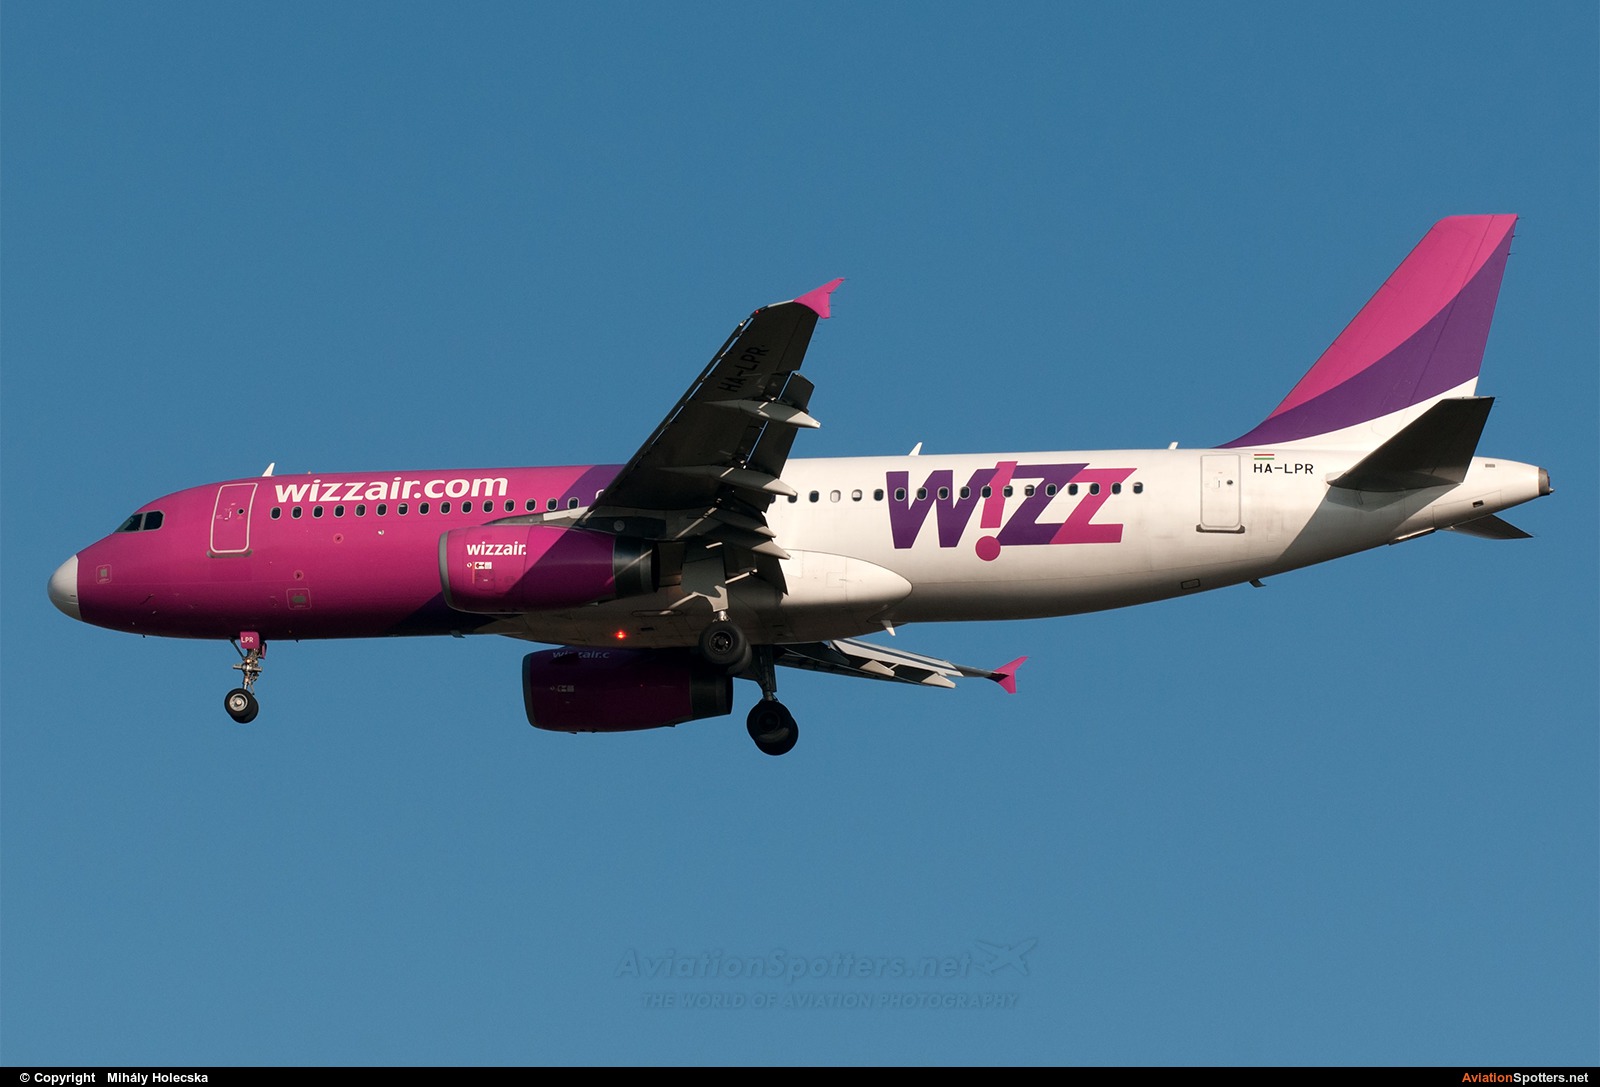 Wizz Air  -  A320  (HA-LPR) By Mihály Holecska (Misixx)